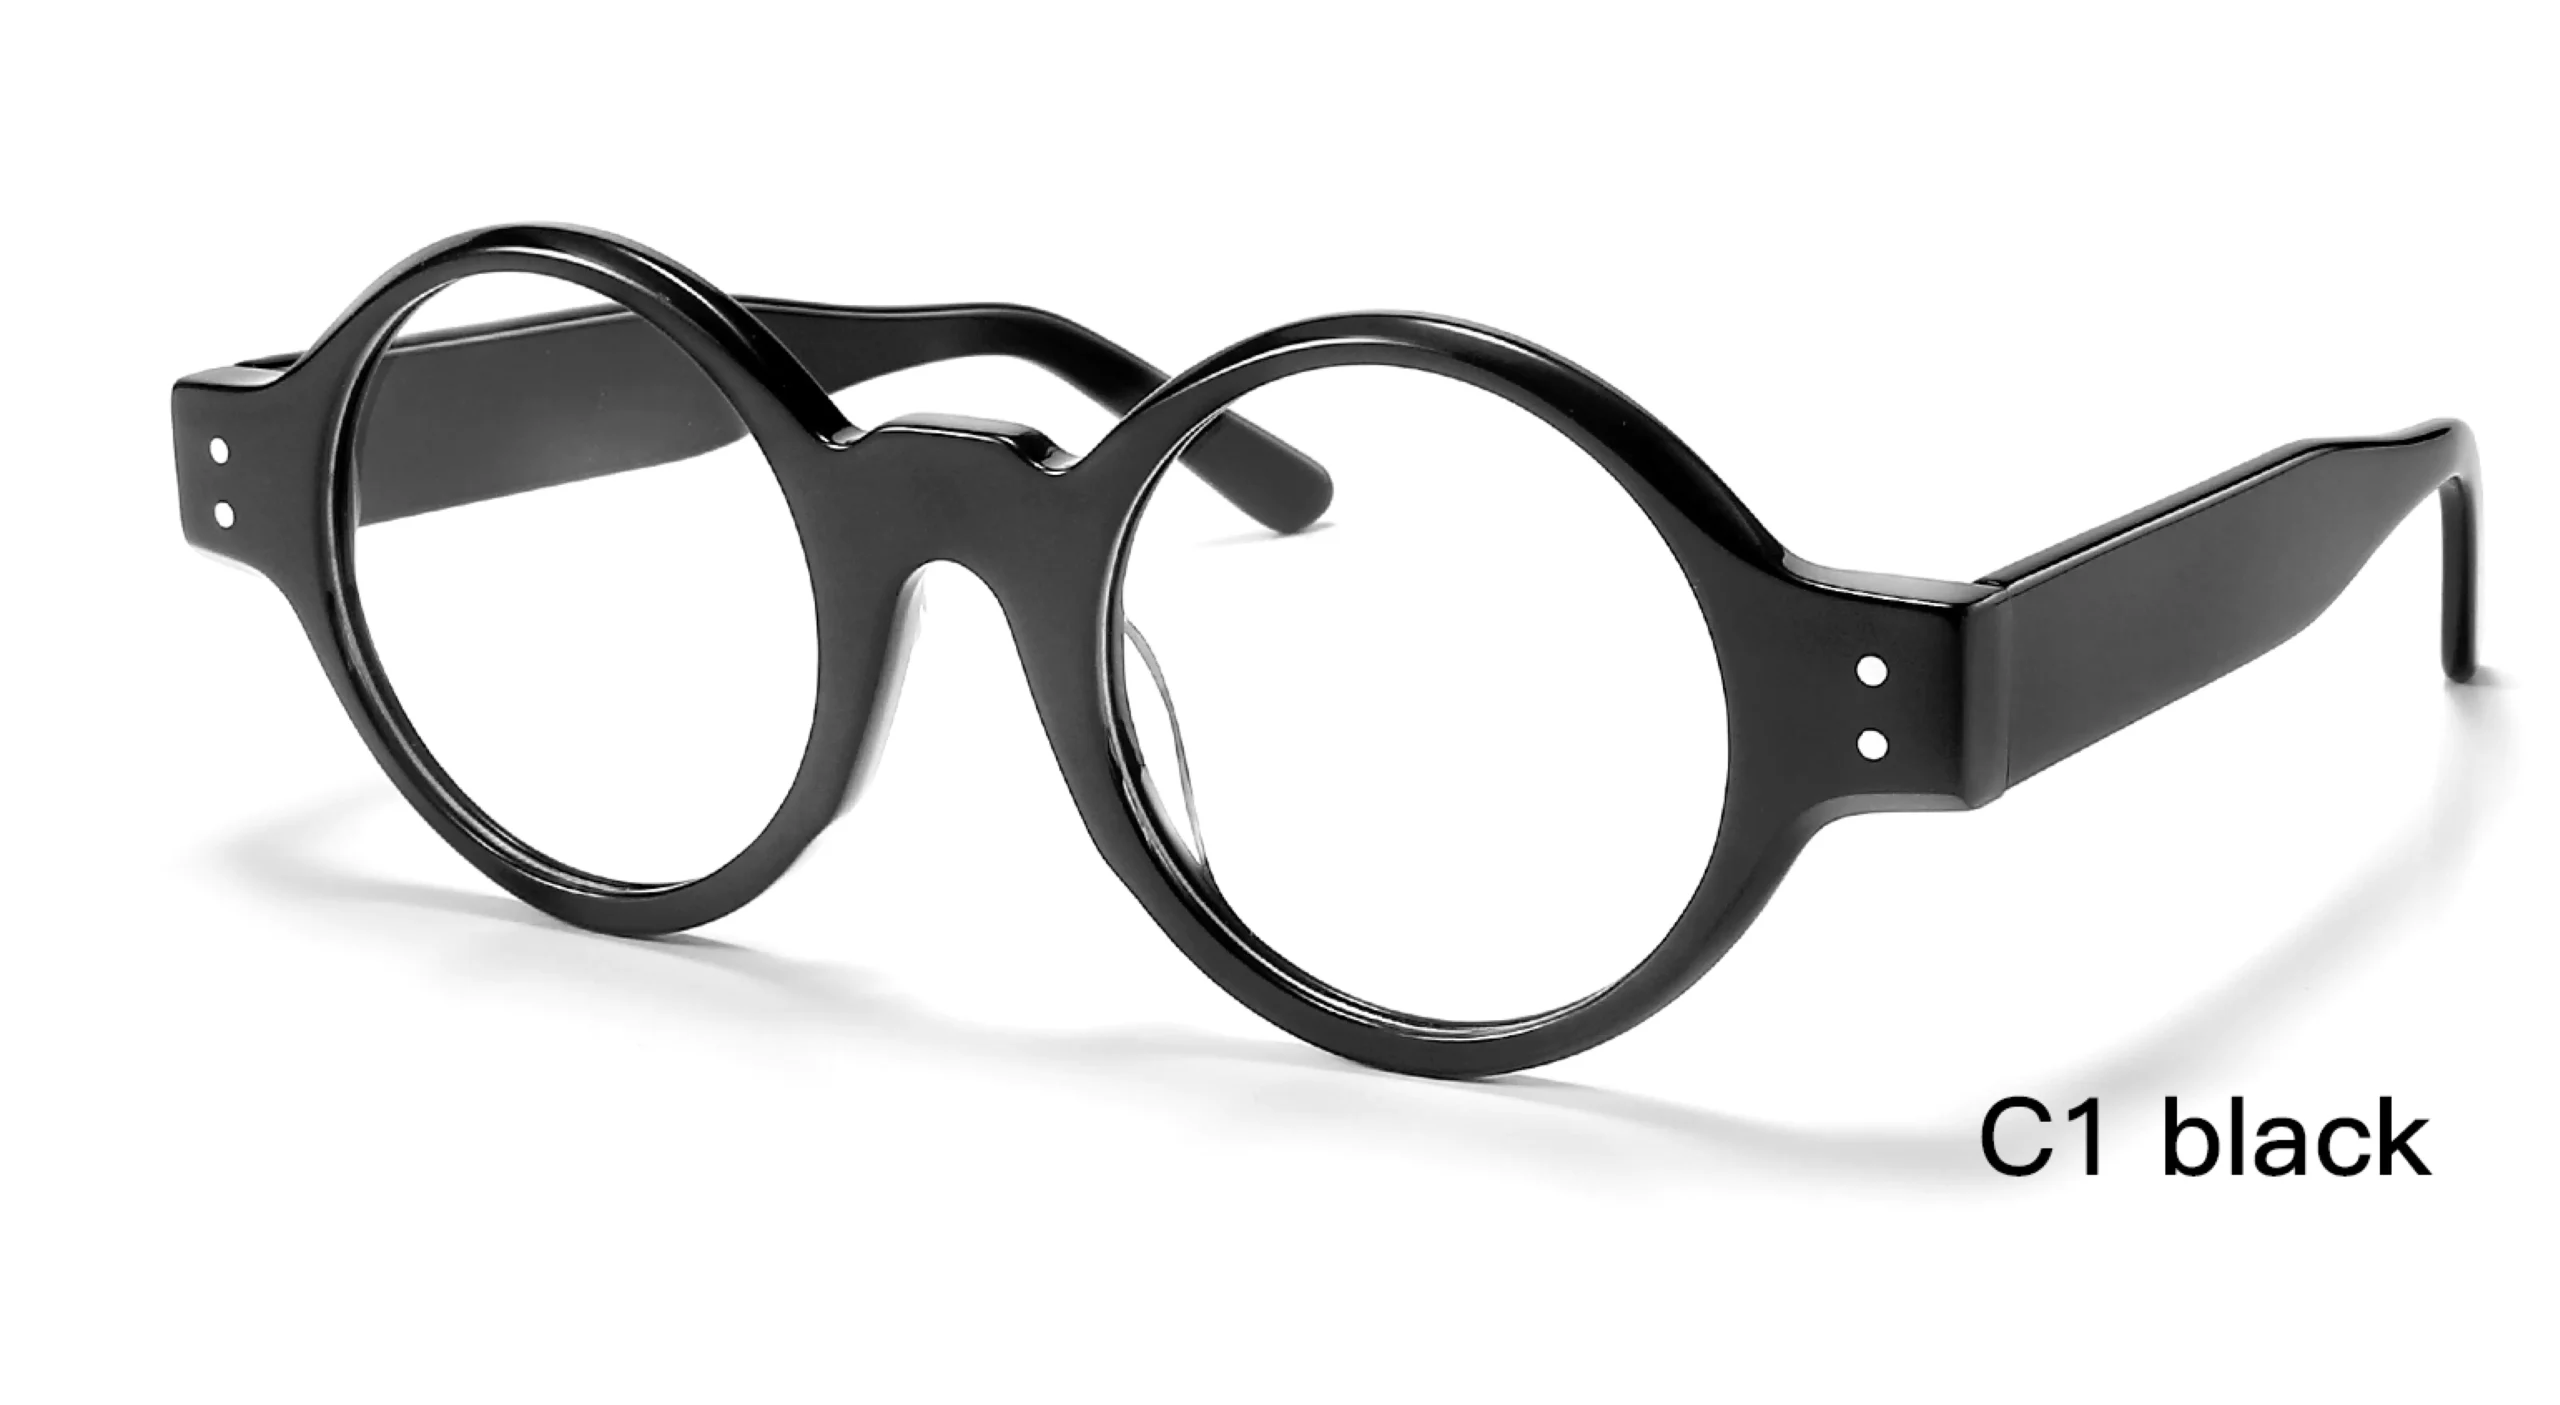 Japanese glasses frames, designer design, acetate, round rivets, round, black, 45 degree display, made in Wenzhou, China